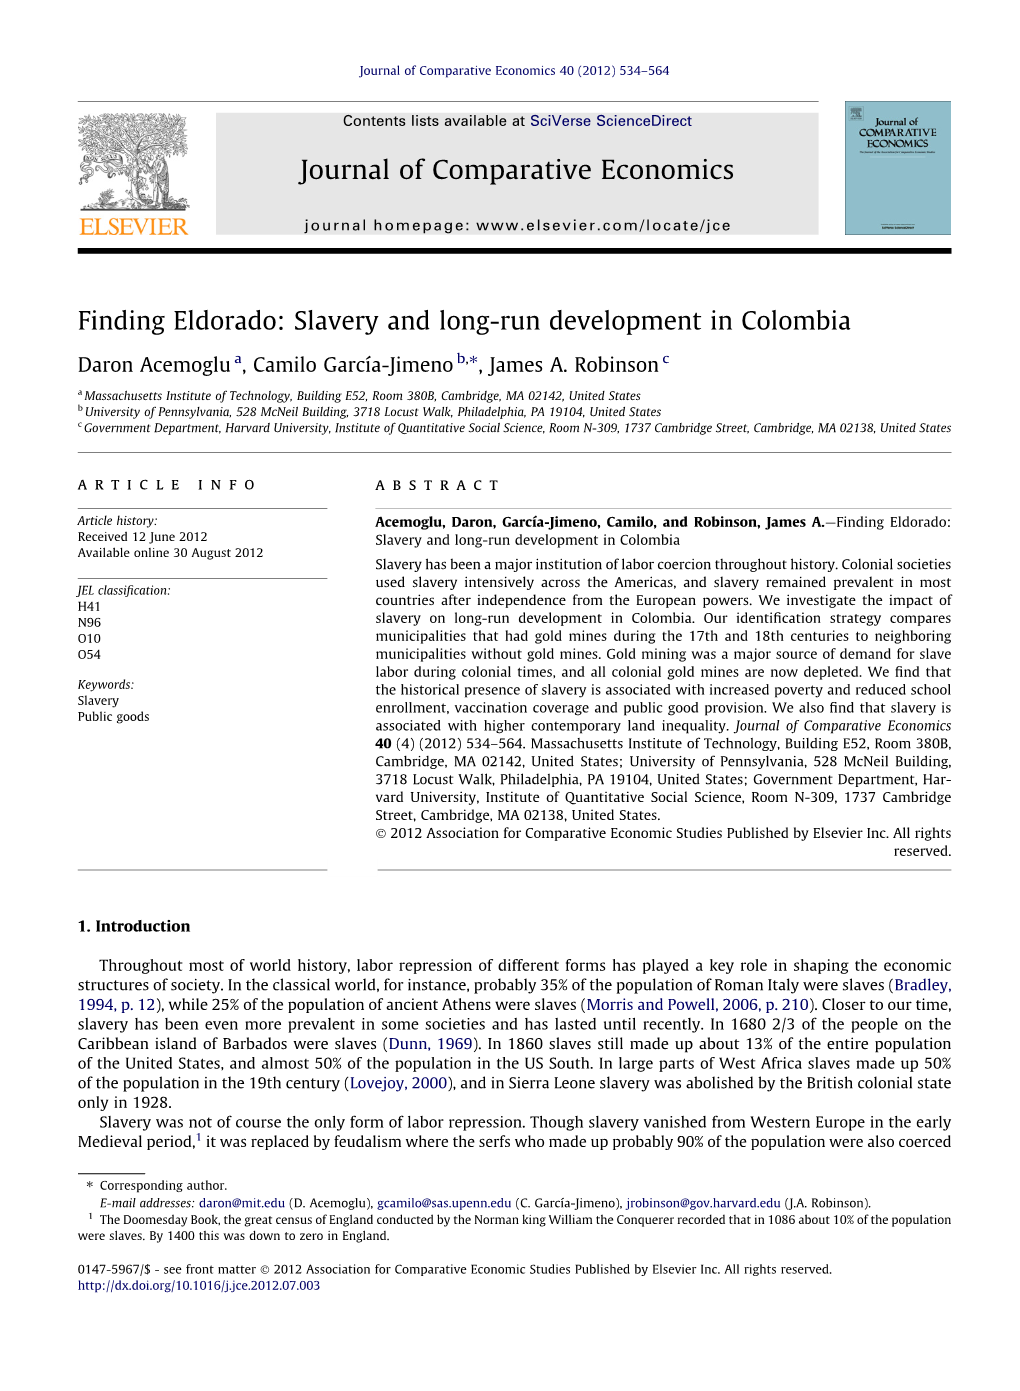 Finding Eldorado: Slavery and Long-Run Development in Colombia ⇑ Daron Acemoglu A, Camilo García-Jimeno B, , James A